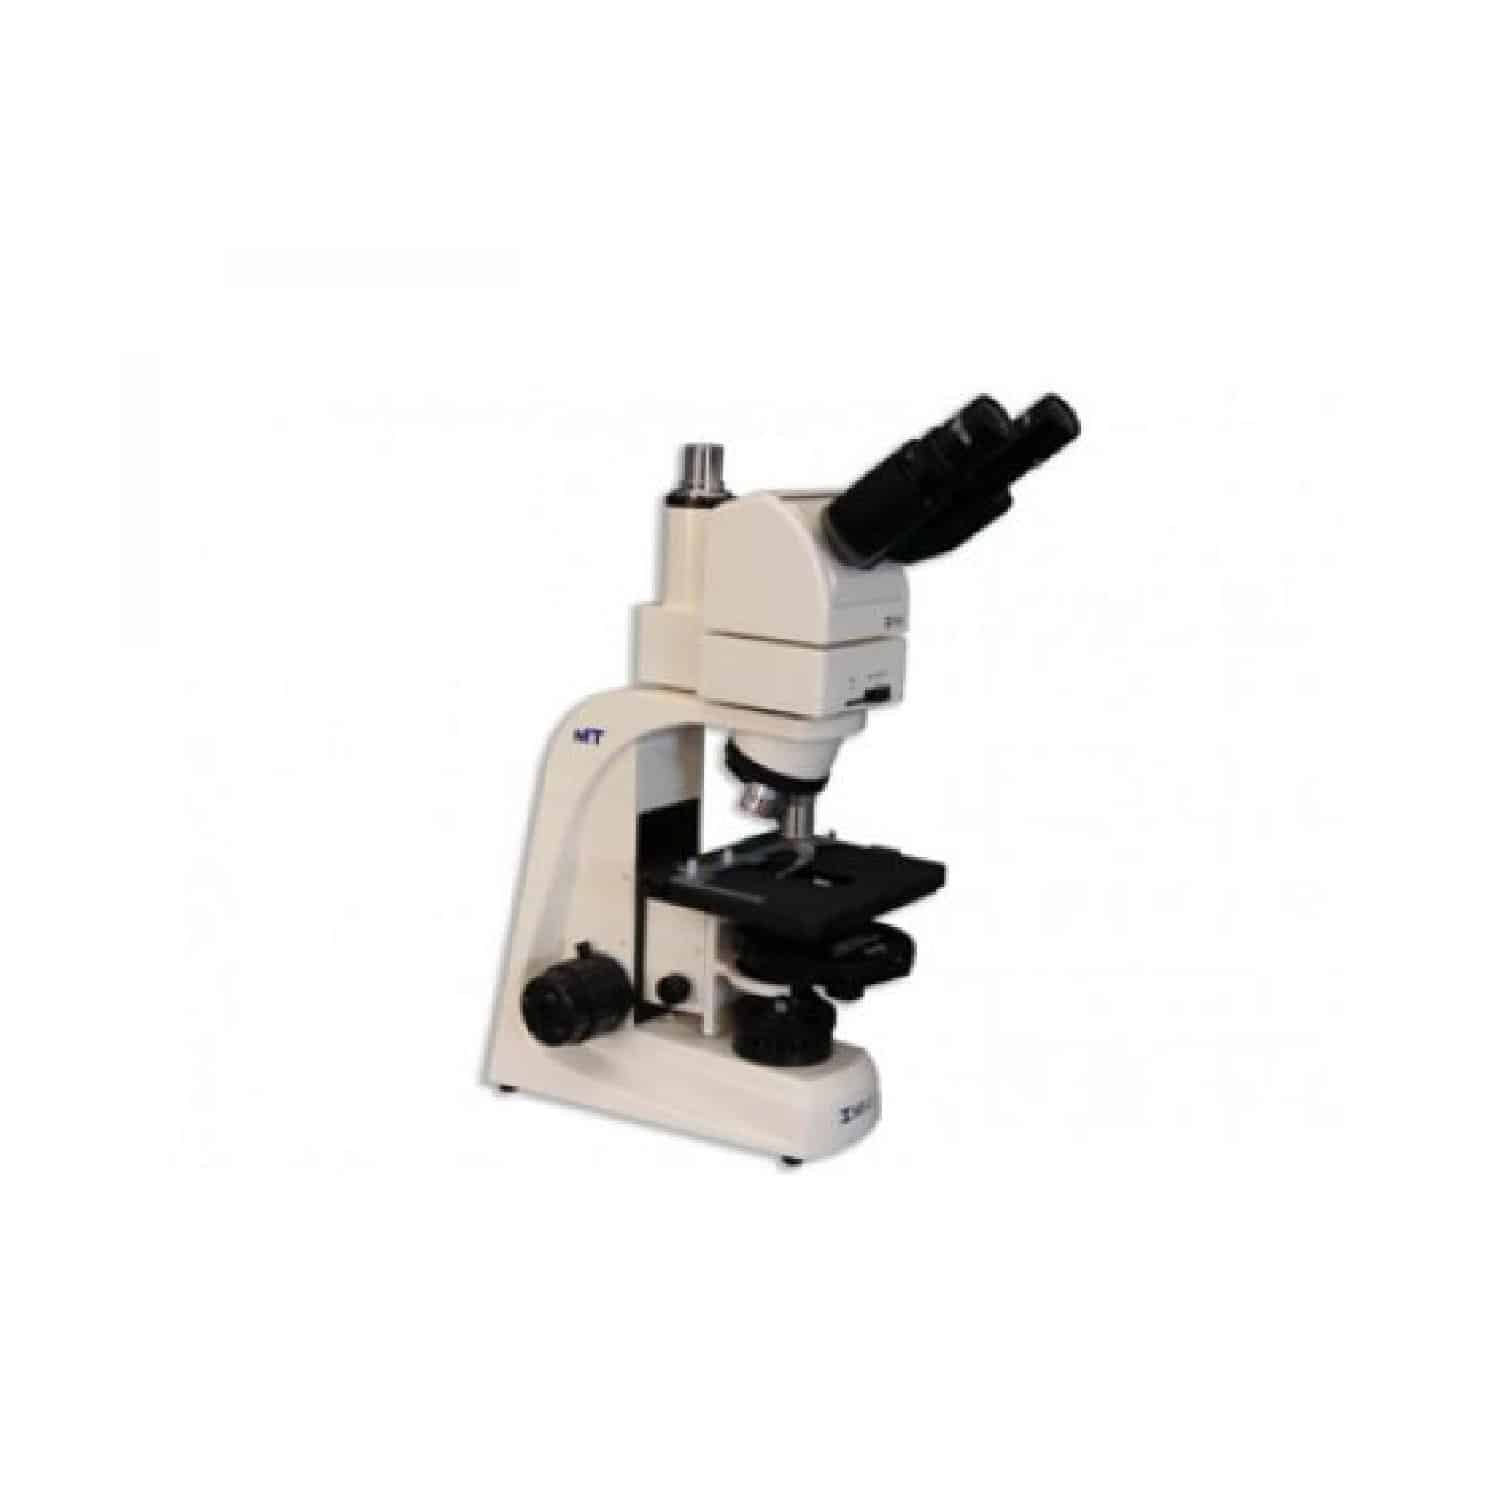 MT4000 series Biological Microscope